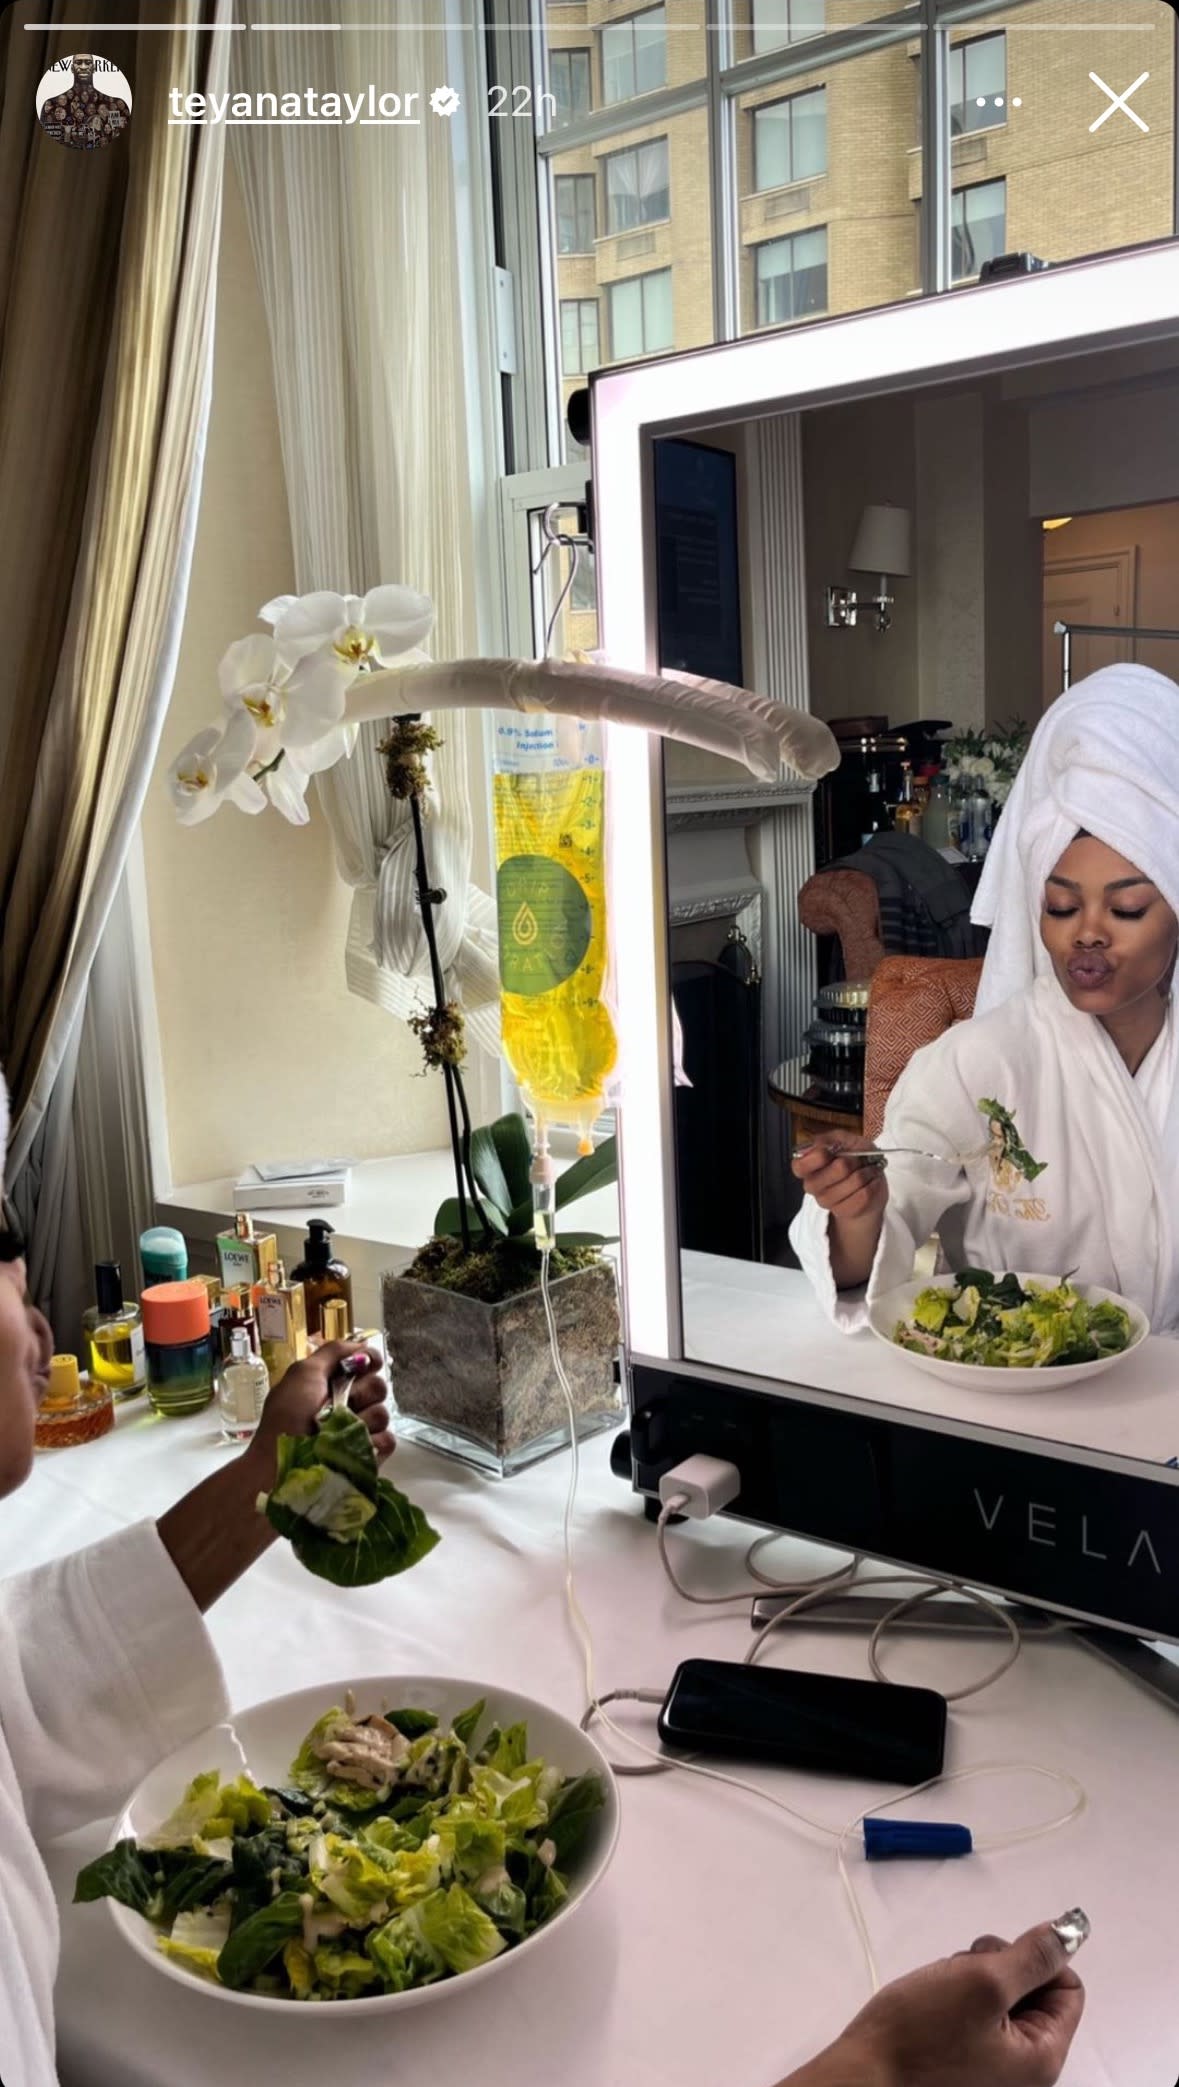 Teyana Taylor with a salad and IV drip. (@teyanataylor via Instagram)